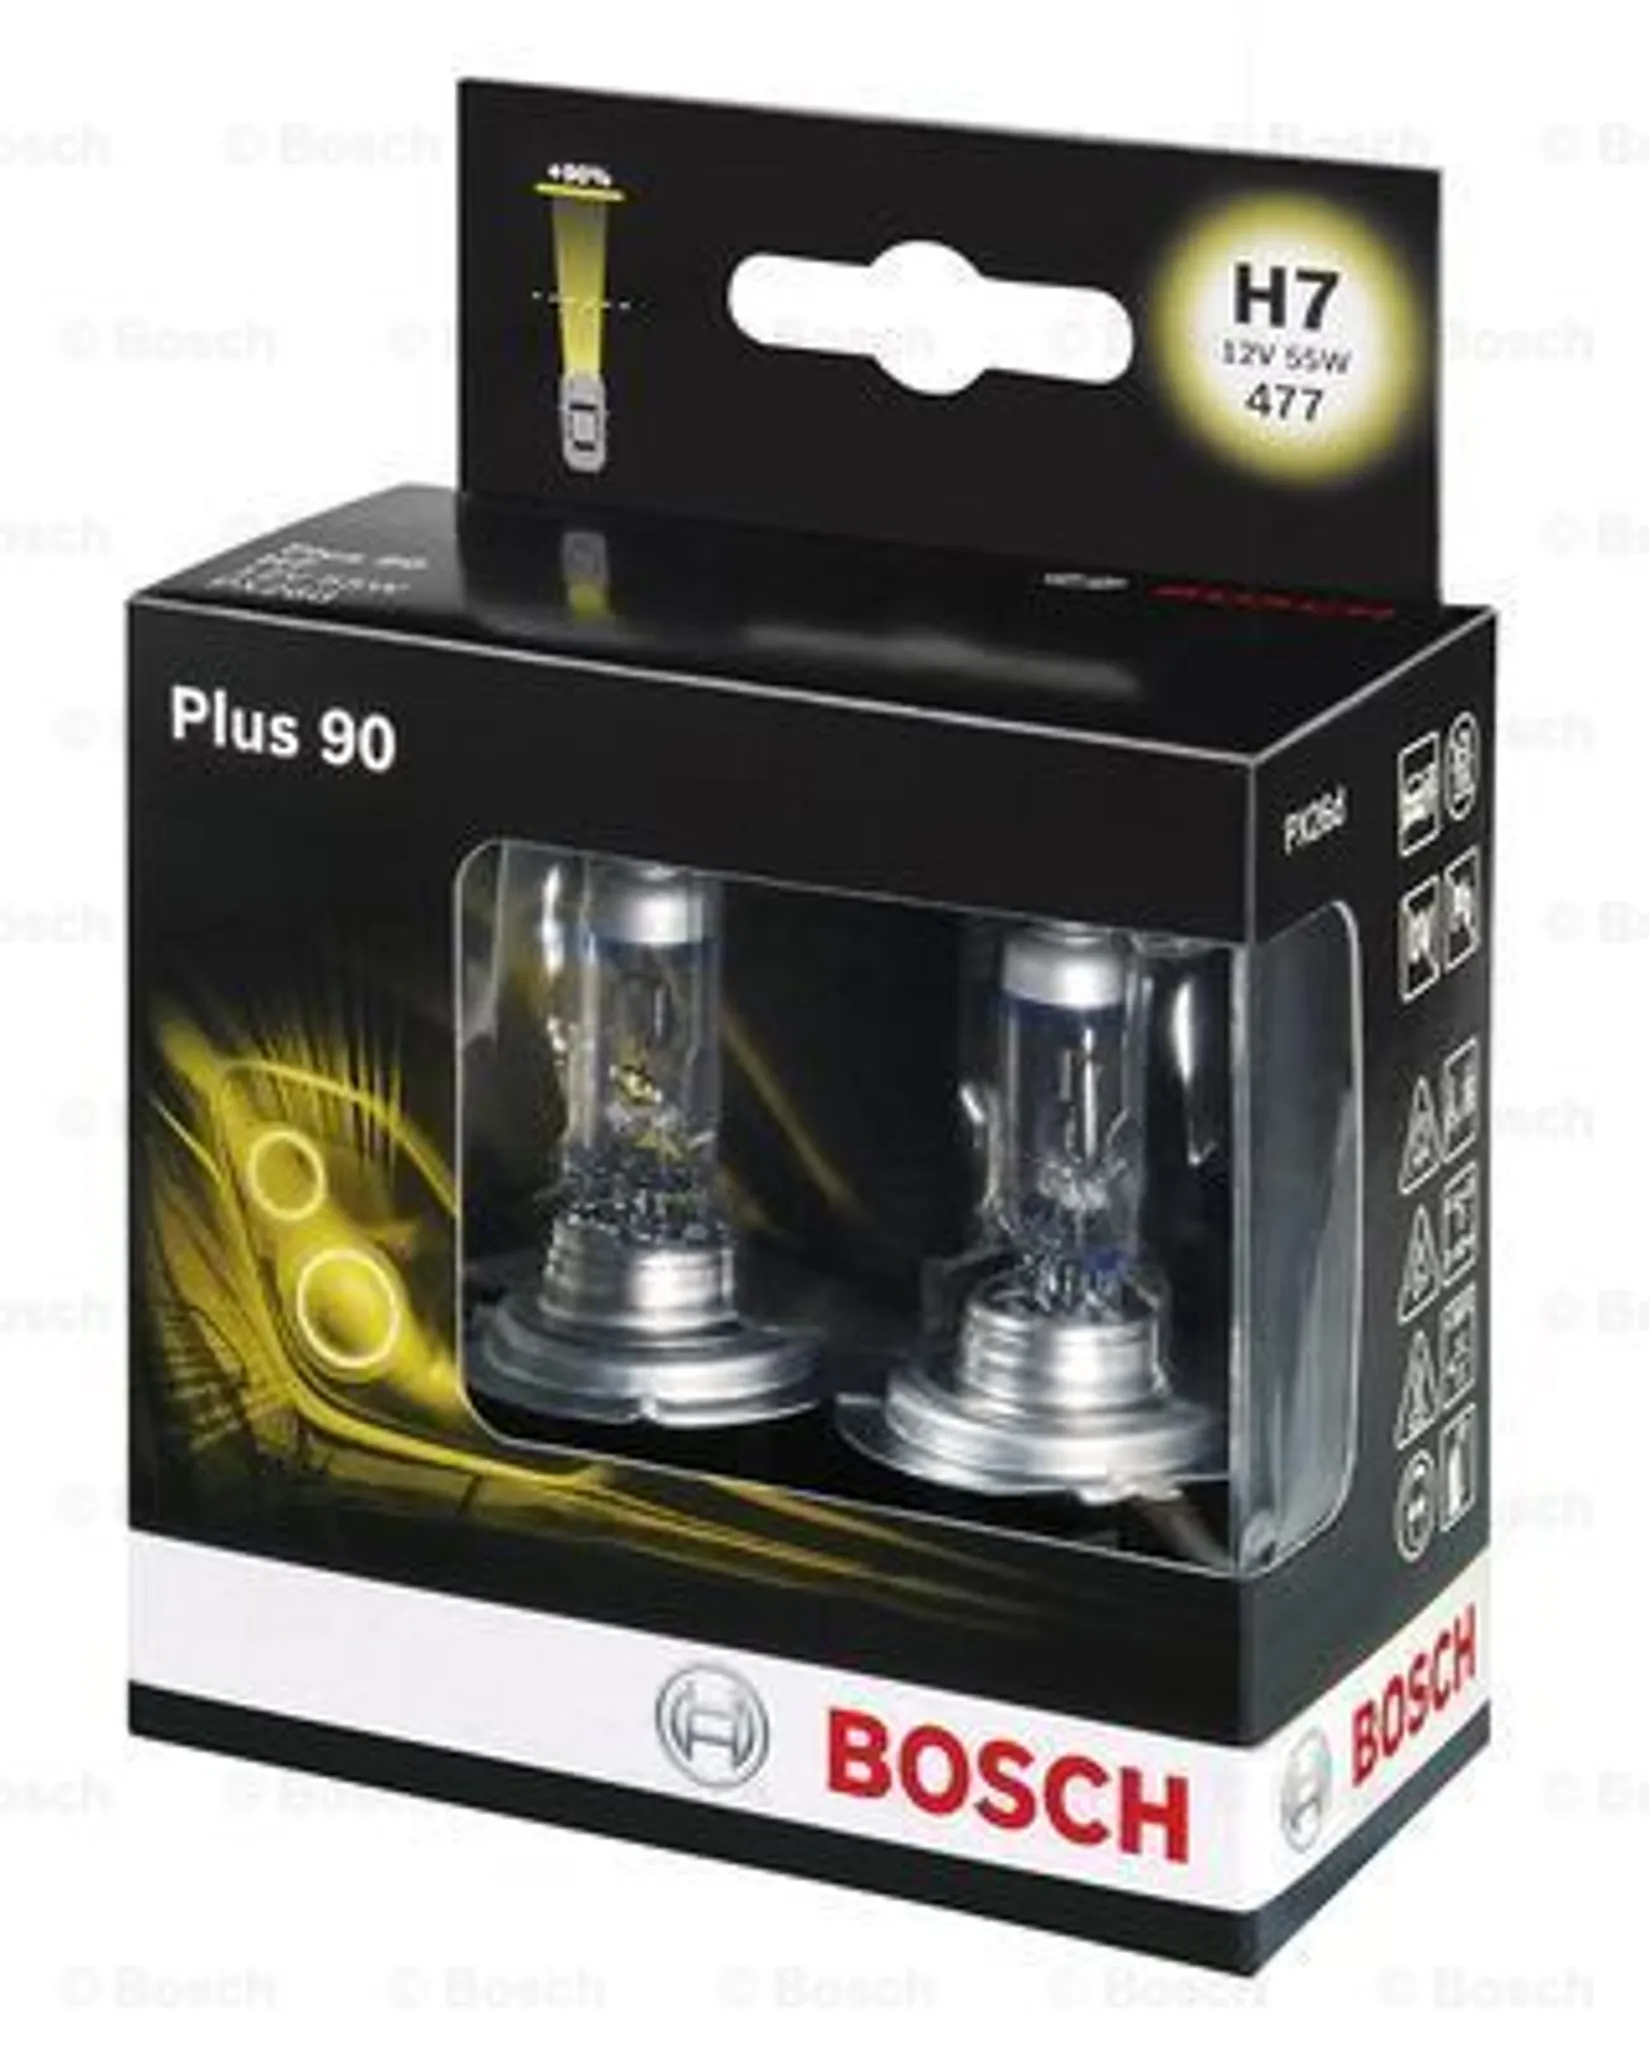 H7 BOSCH Lampen Autolampen 12V 55W 1 987 301